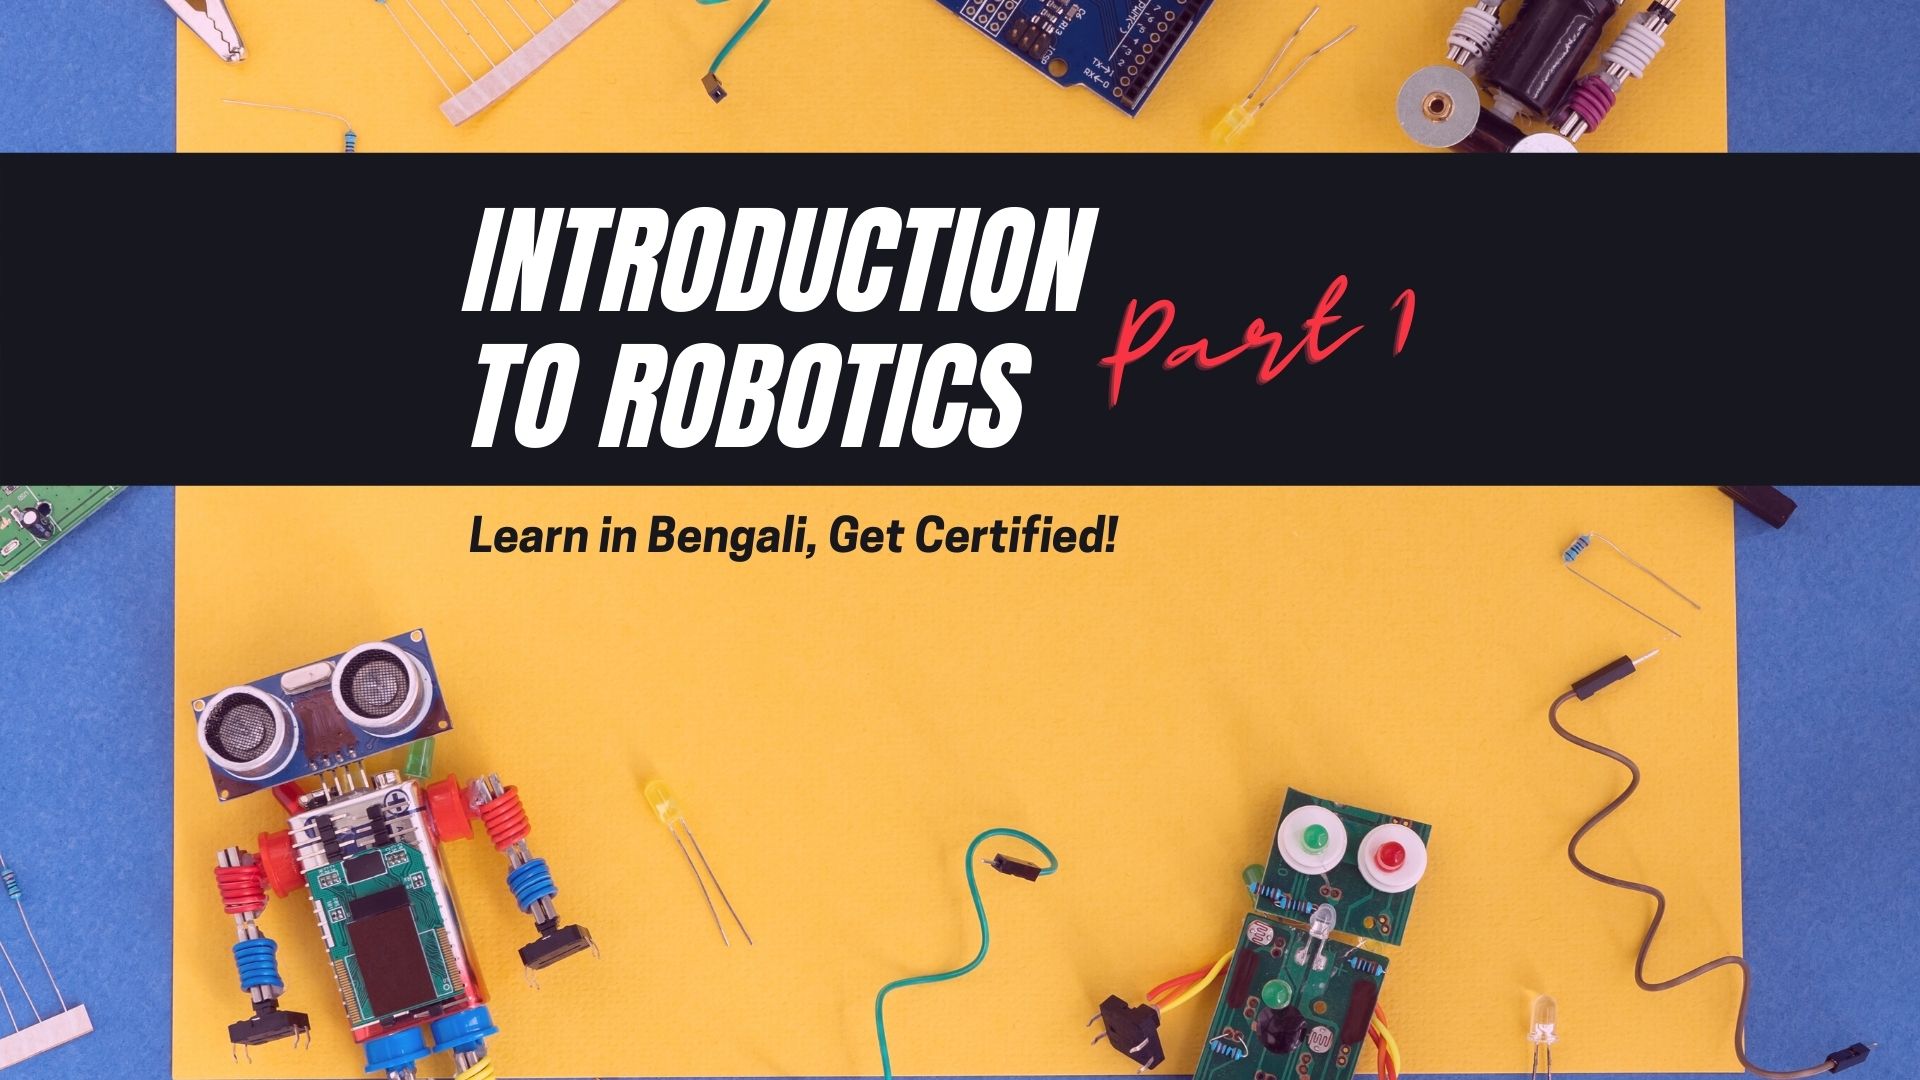 Introduction to Robotics (Part 1) Course Image